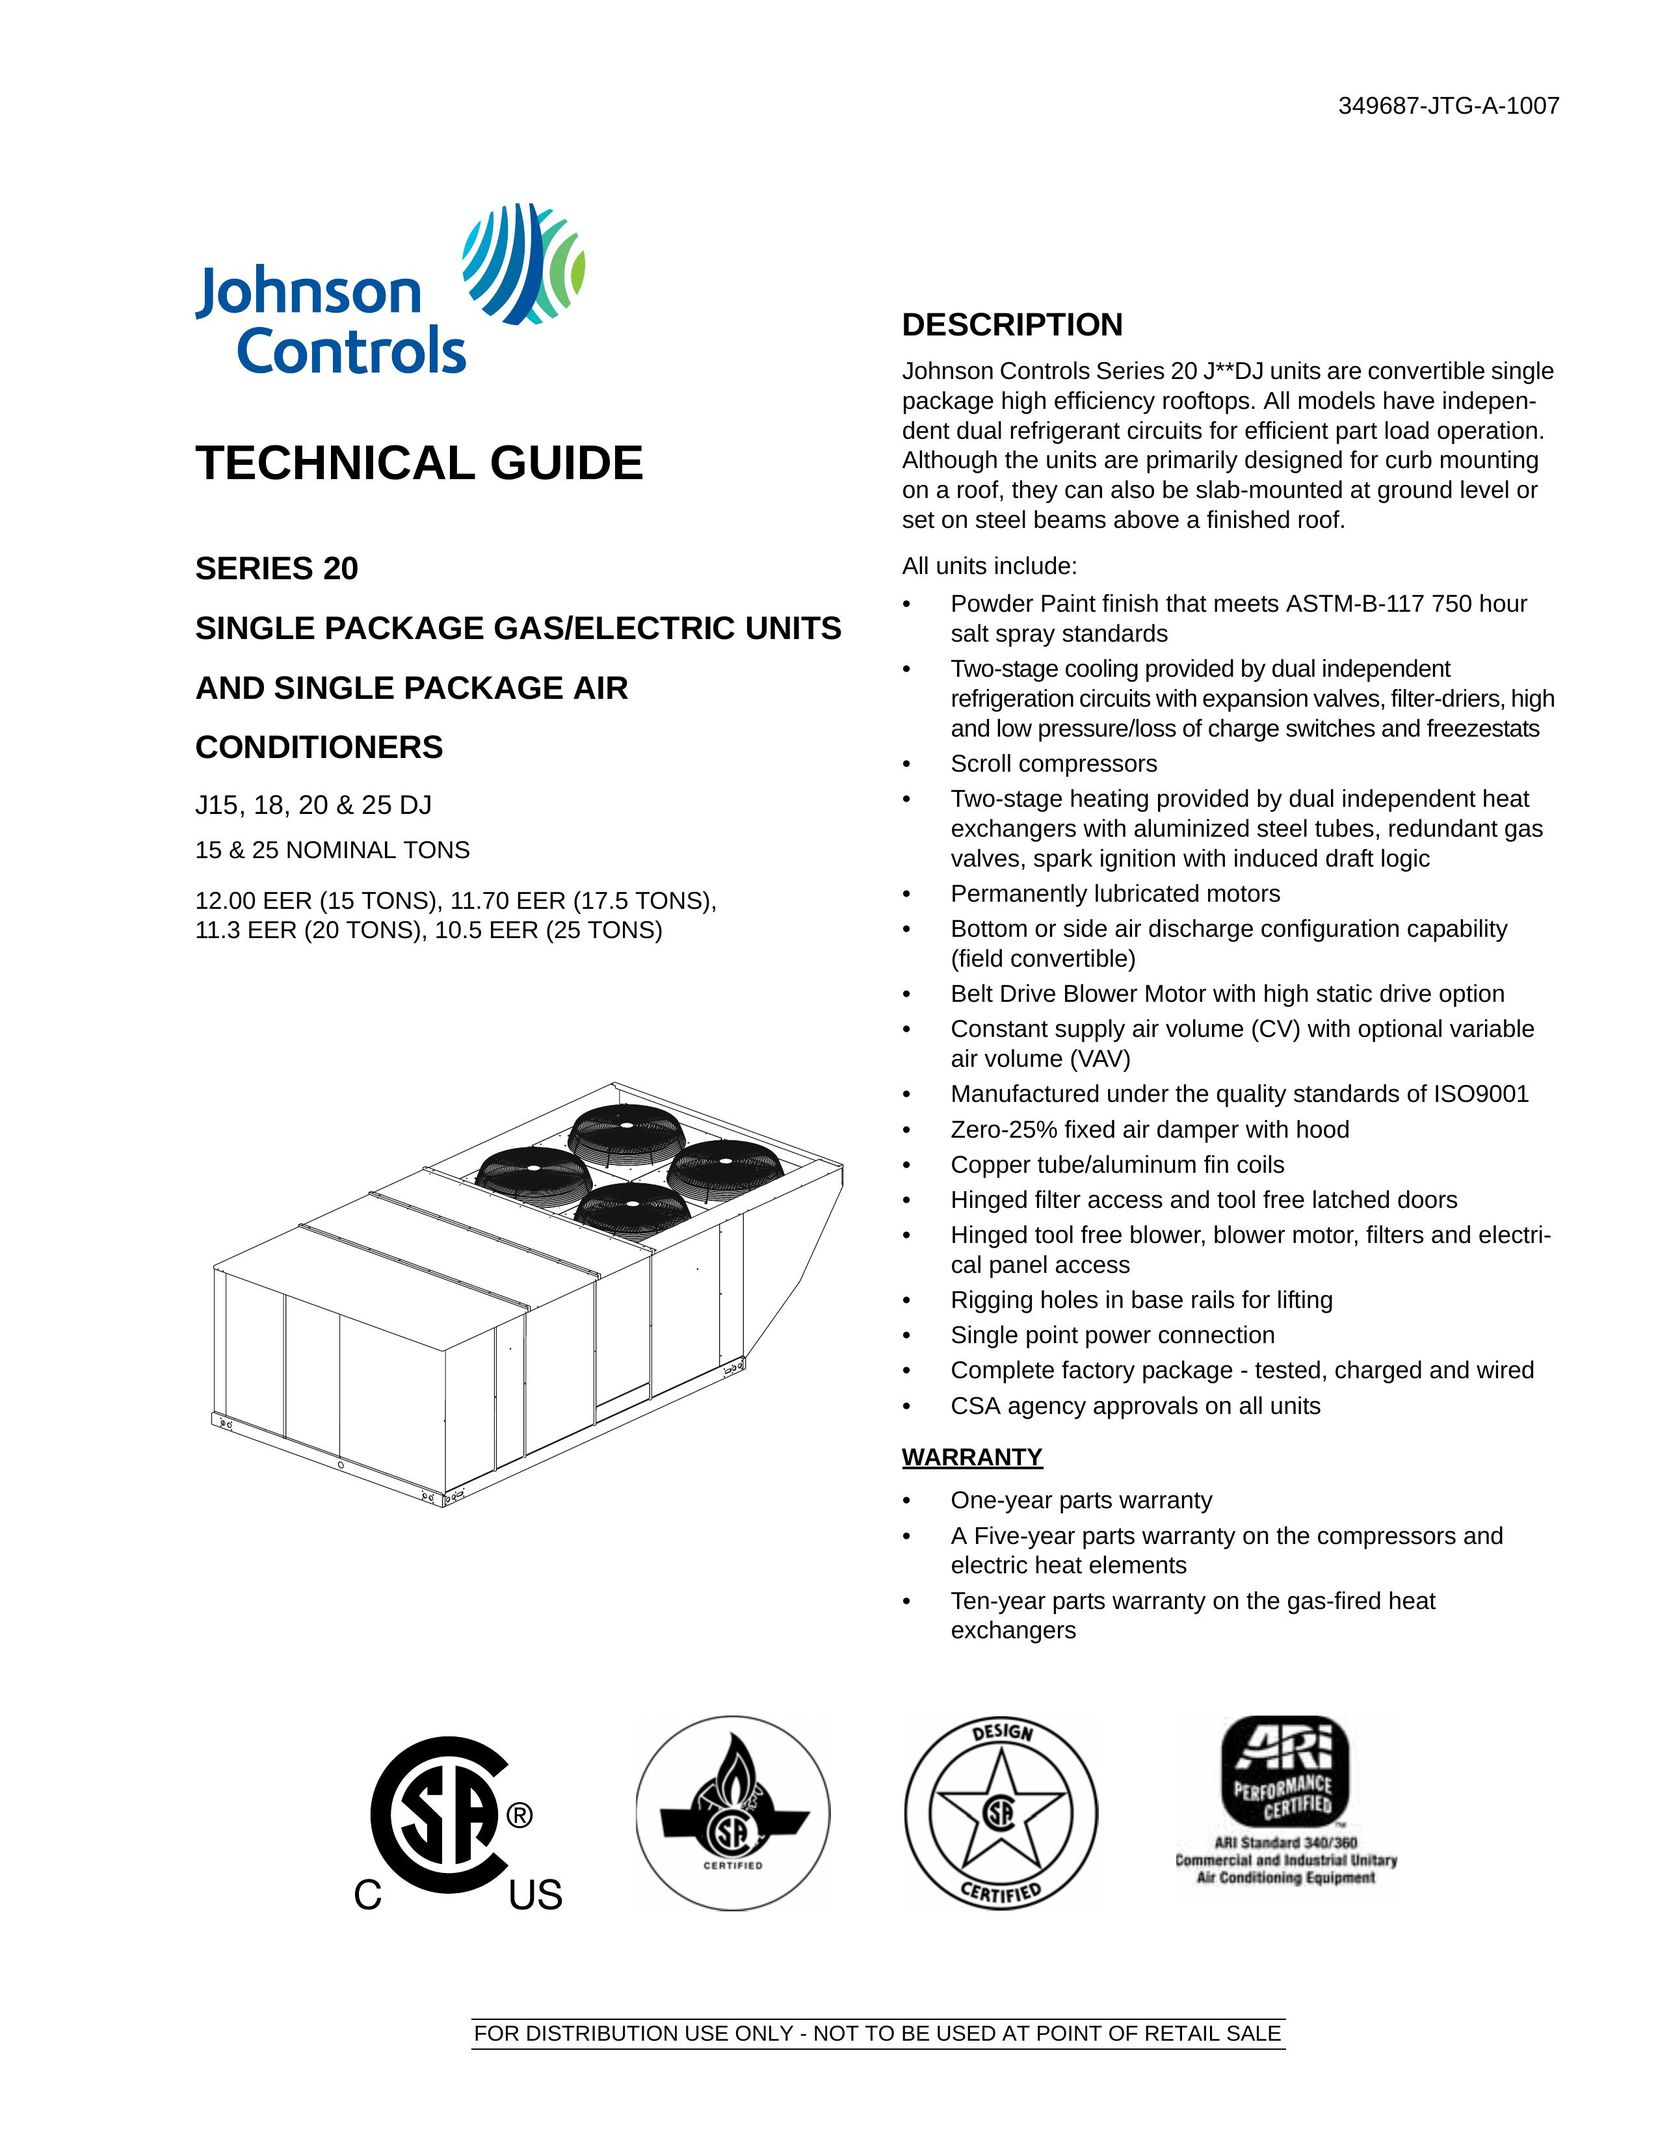 Johnson Controls J15 Air Conditioner User Manual